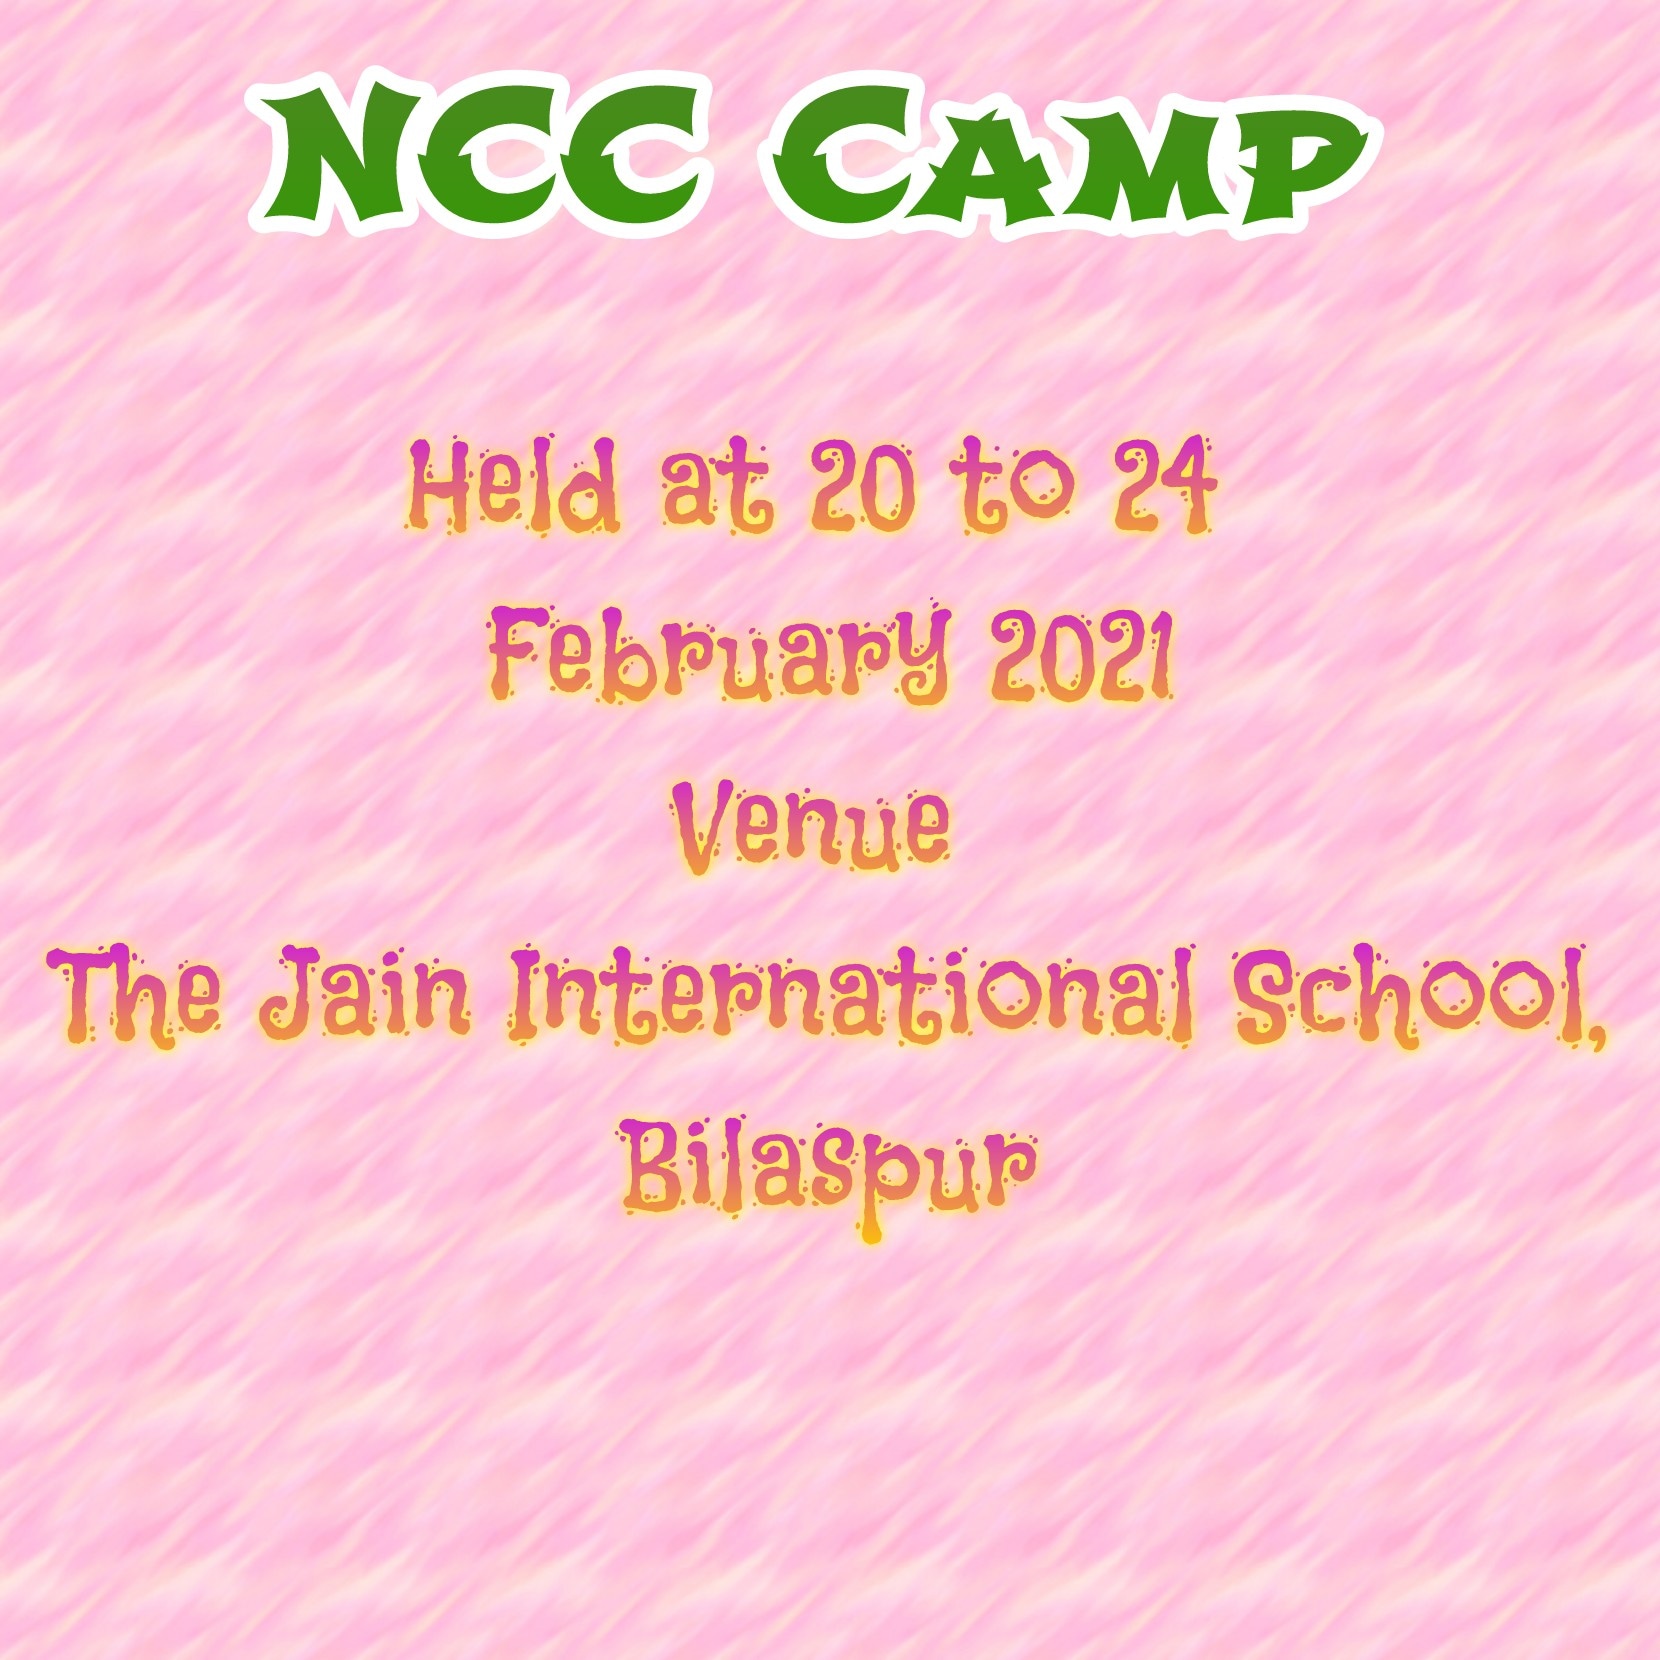 NCC Event - NCC Camps